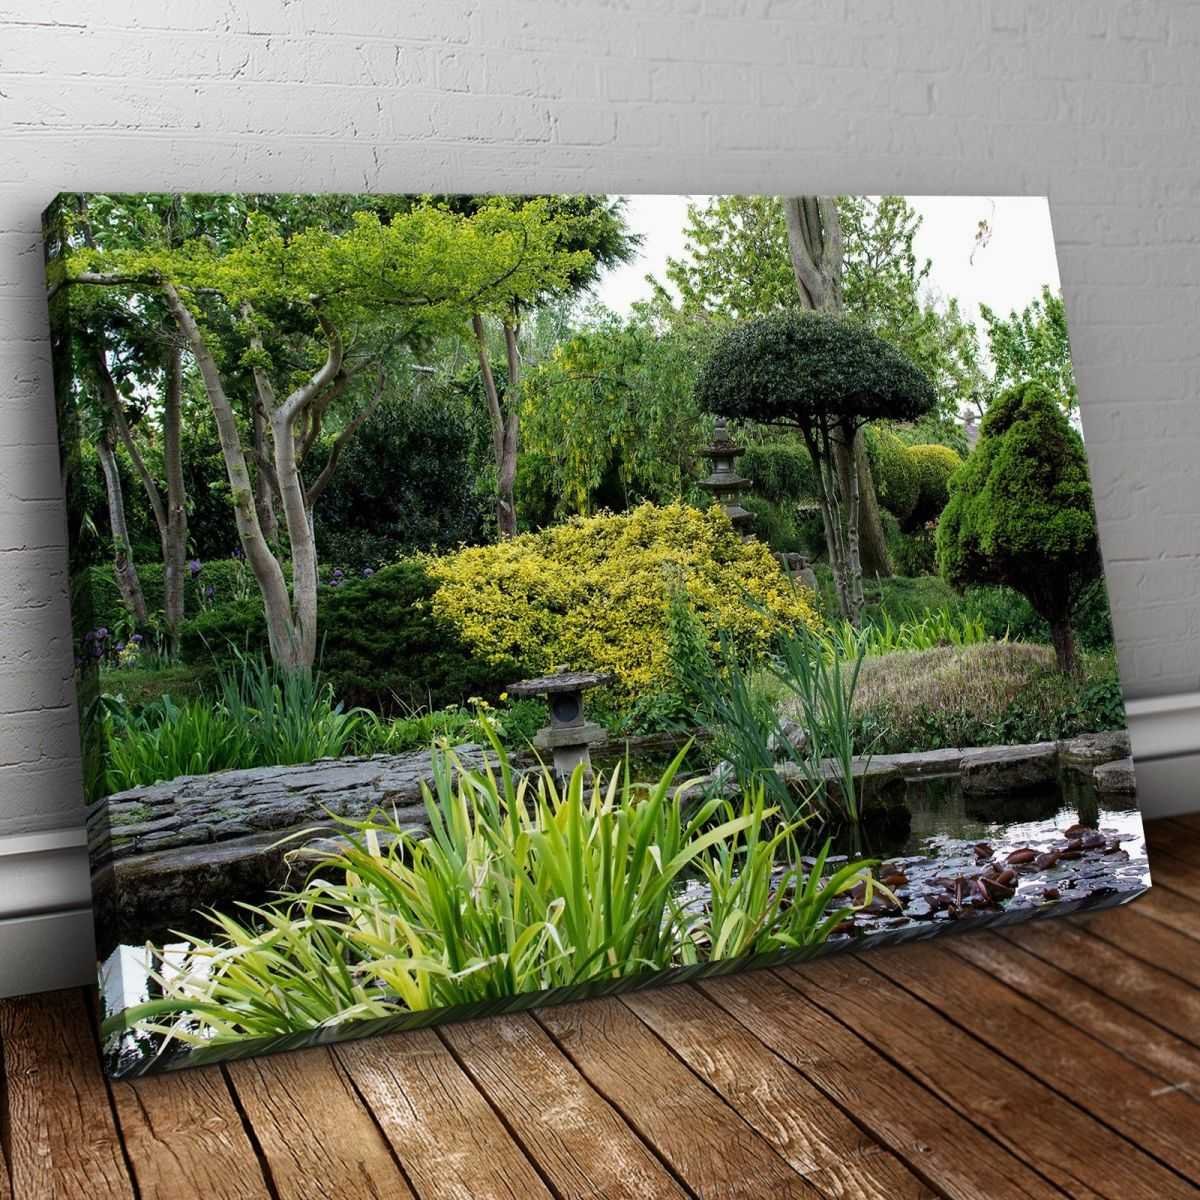 Quadro Paesaggio giardino giapponese quadro moderno stampa su tela psgo913